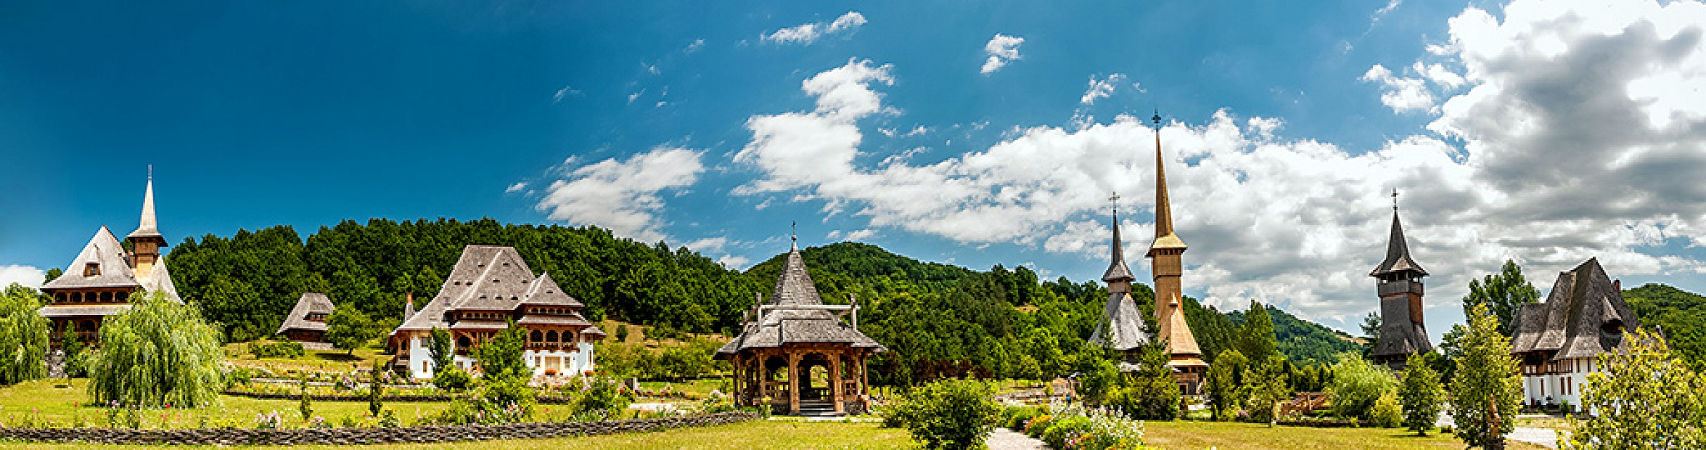 Mănăstirea_Bârsana_Maramureș.jpg